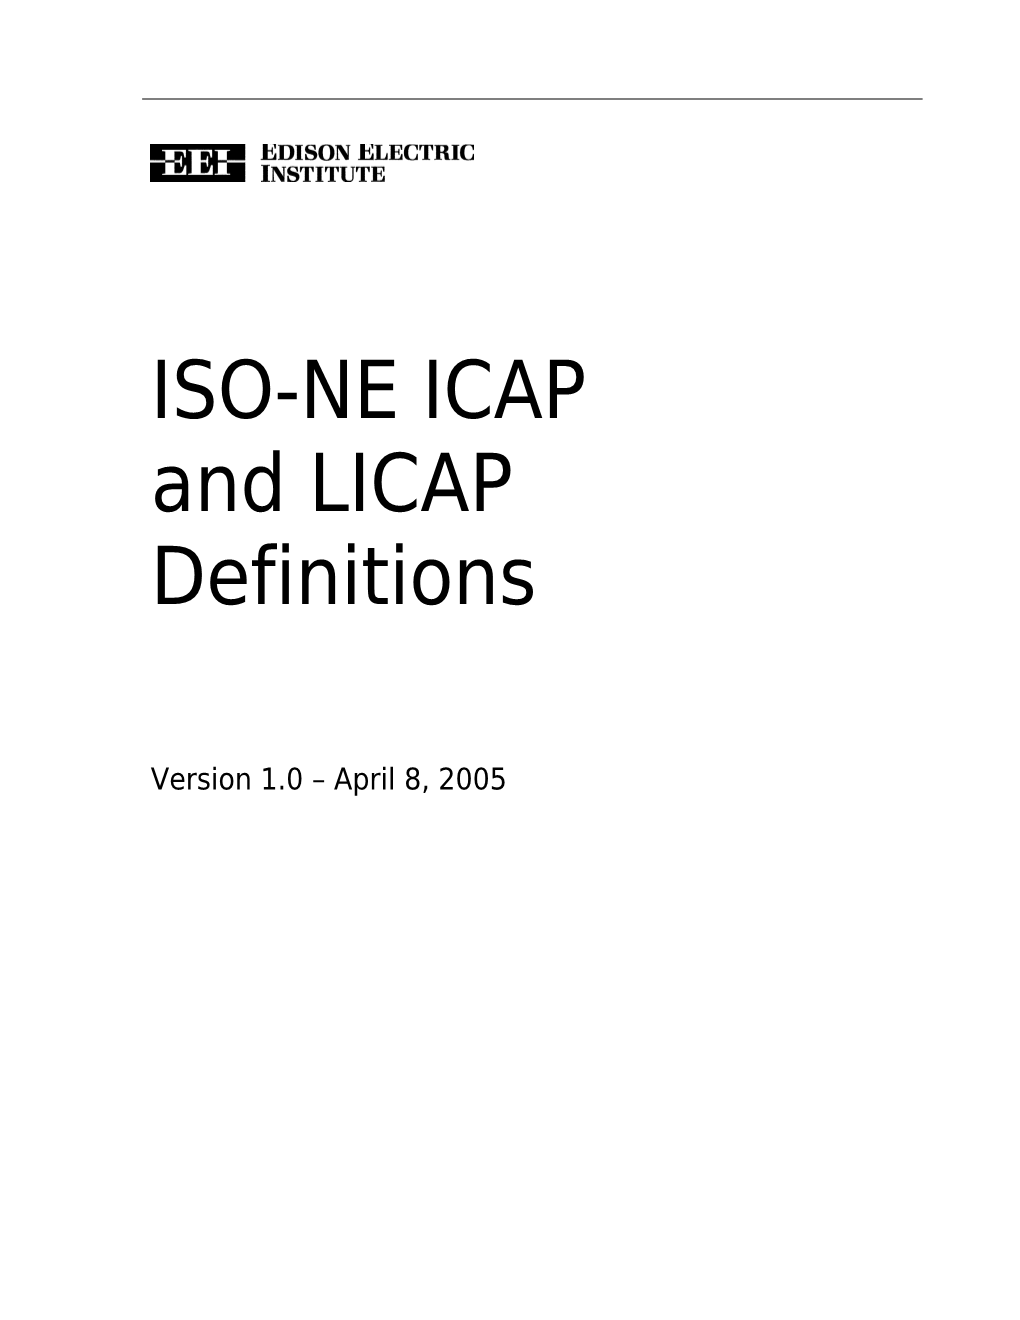 ISO-NE ICAP and LICAP Definitions: Version 1.0 April 8, 2005 1